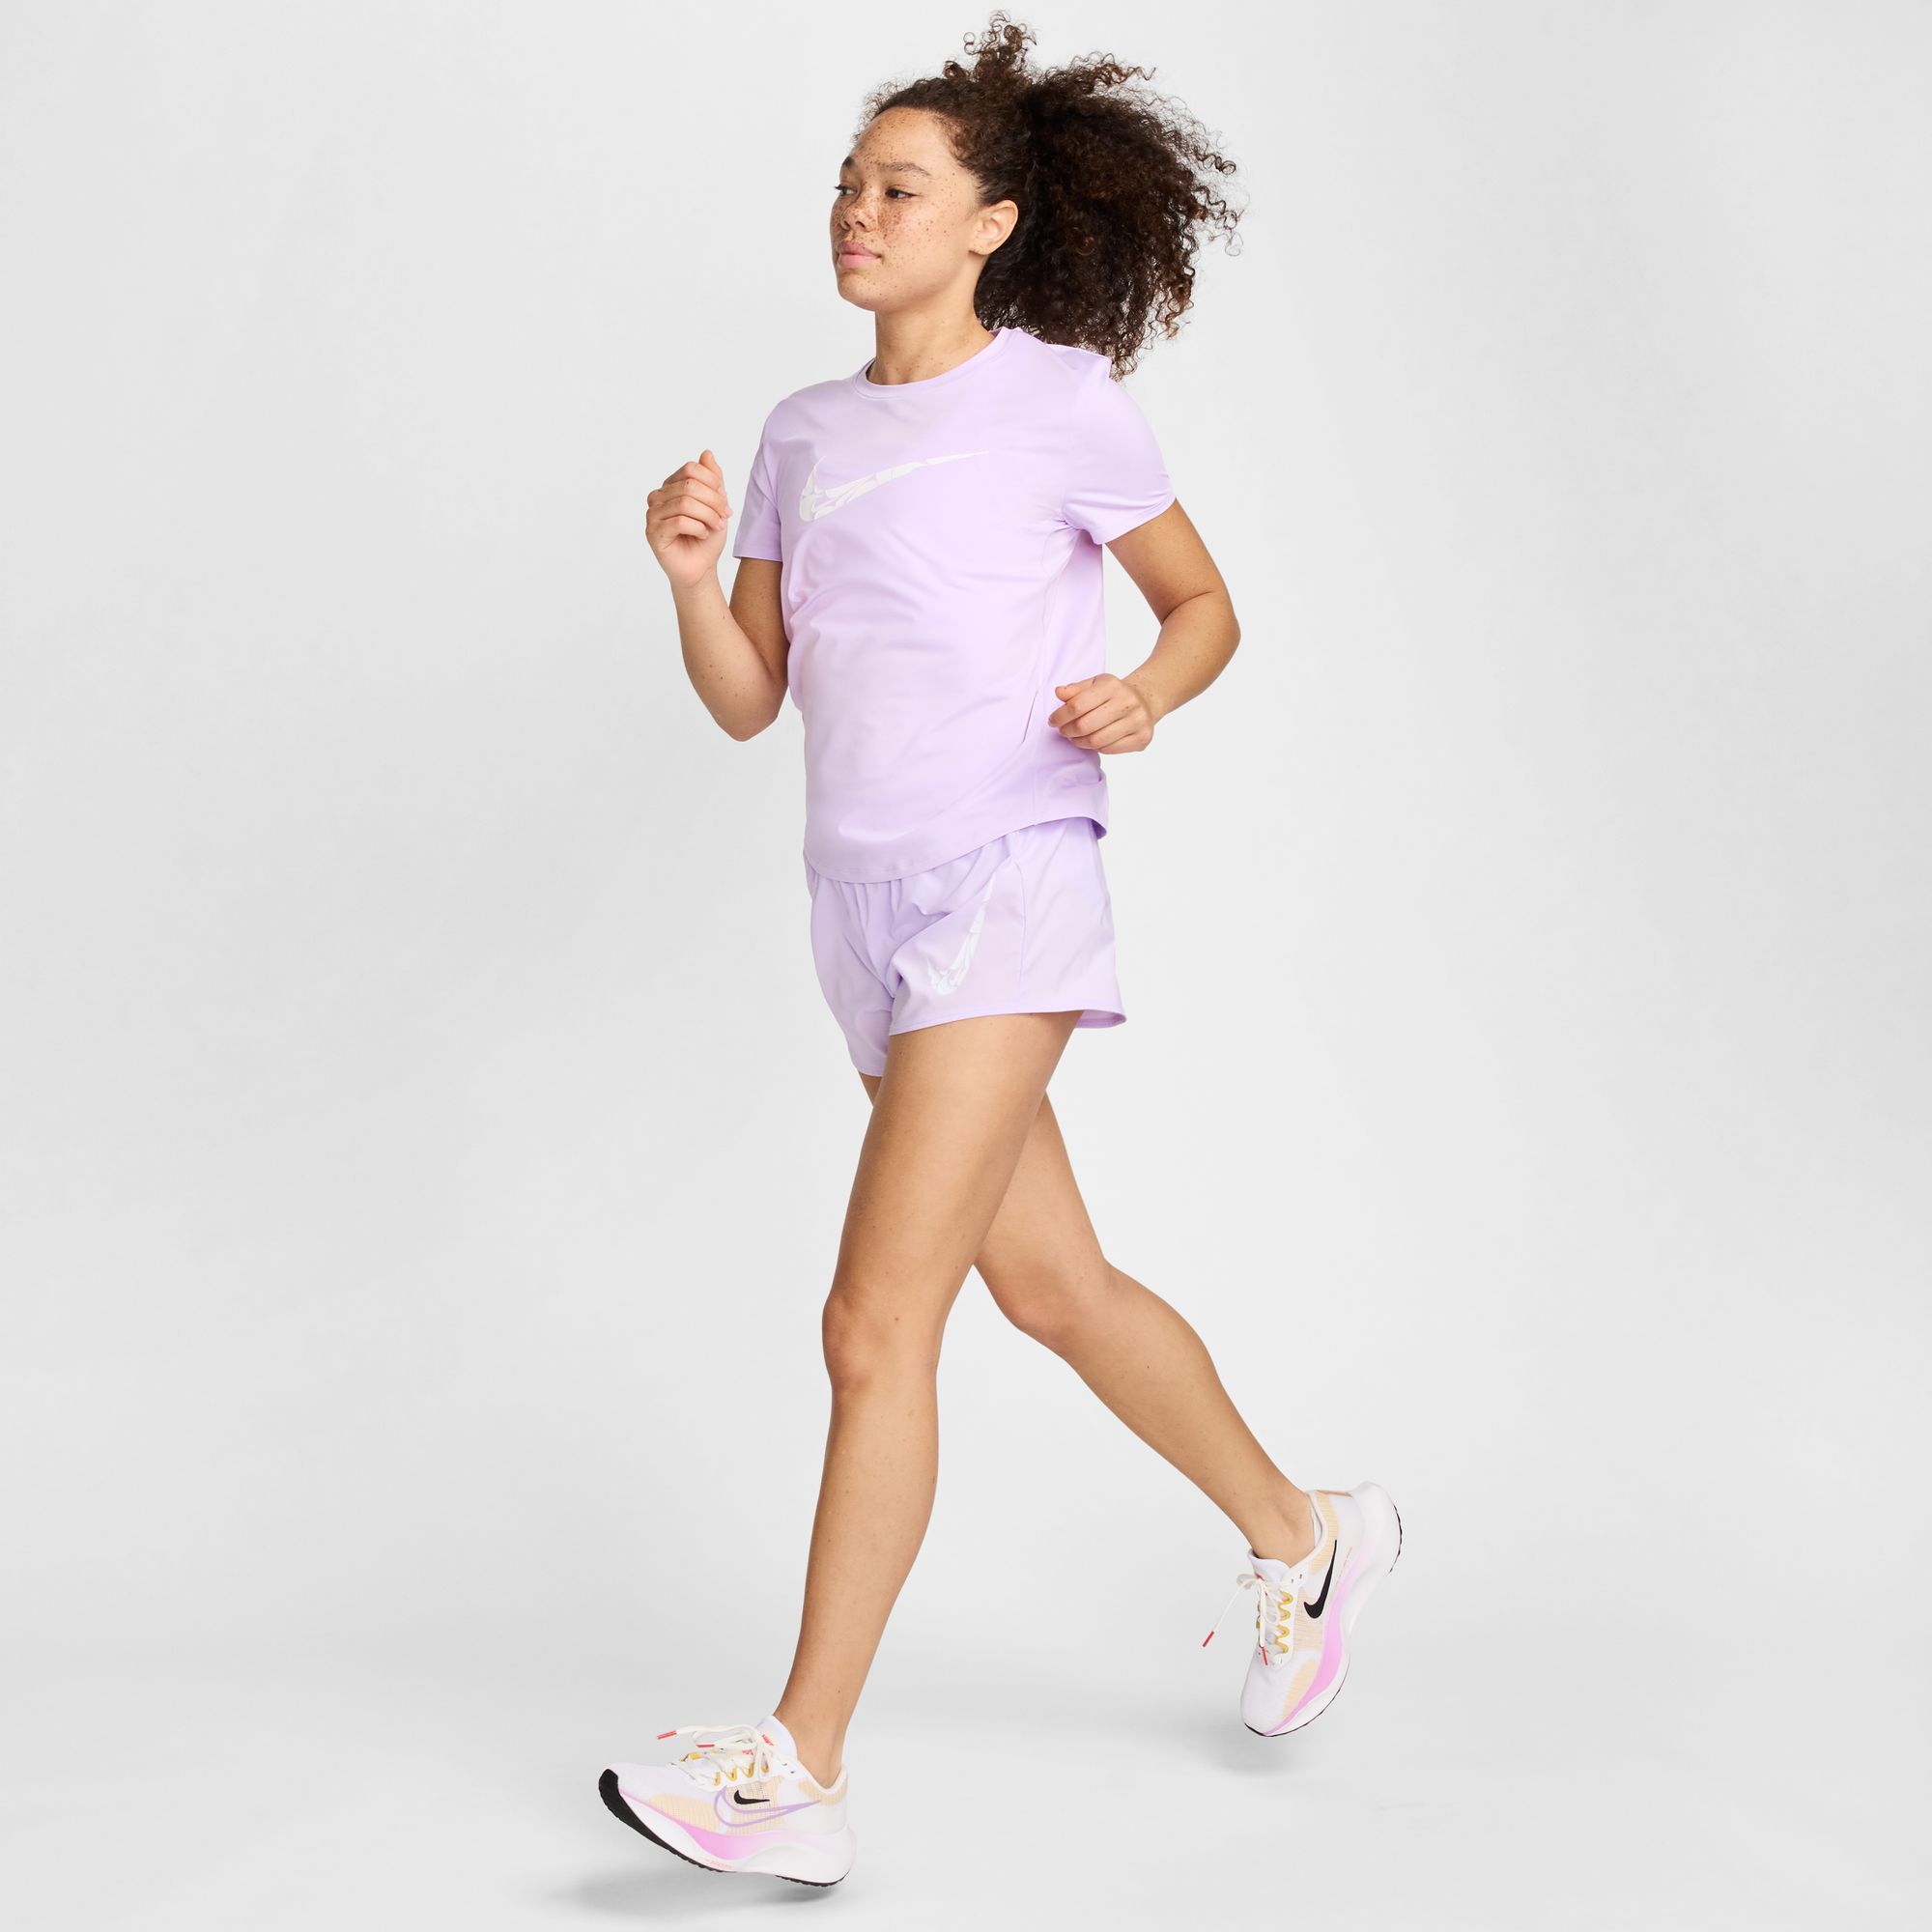 Nike One Swoosh Women's Dri-FIT Short-Sleeve Running Top